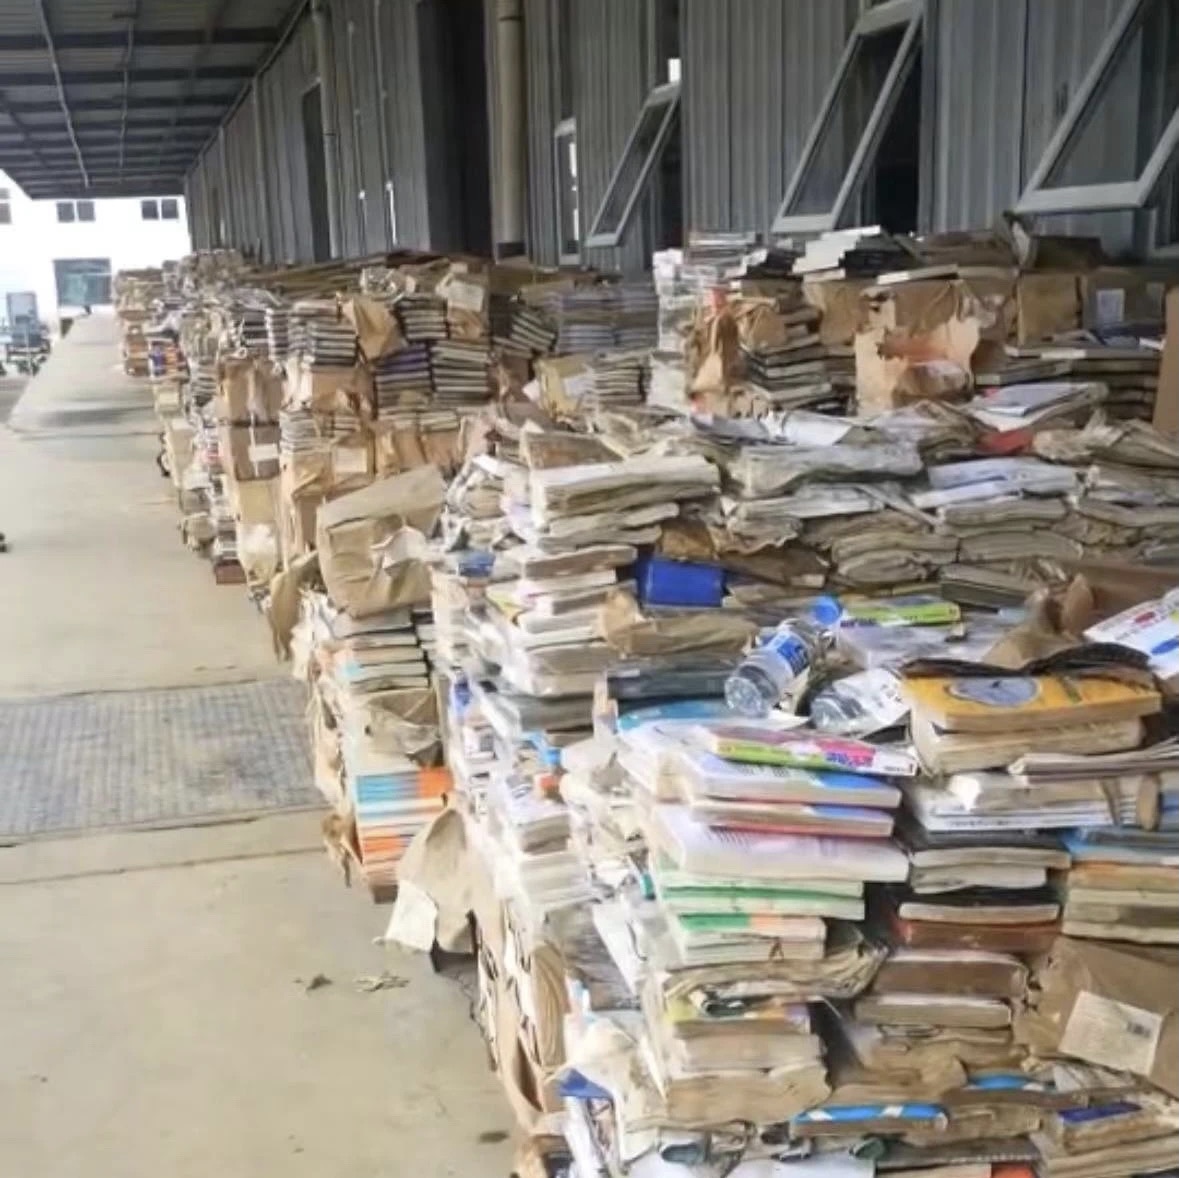 Can all hands lift a sunken ship?, Help Zhuozhou Book Industry Part | Books | Zhuozhou